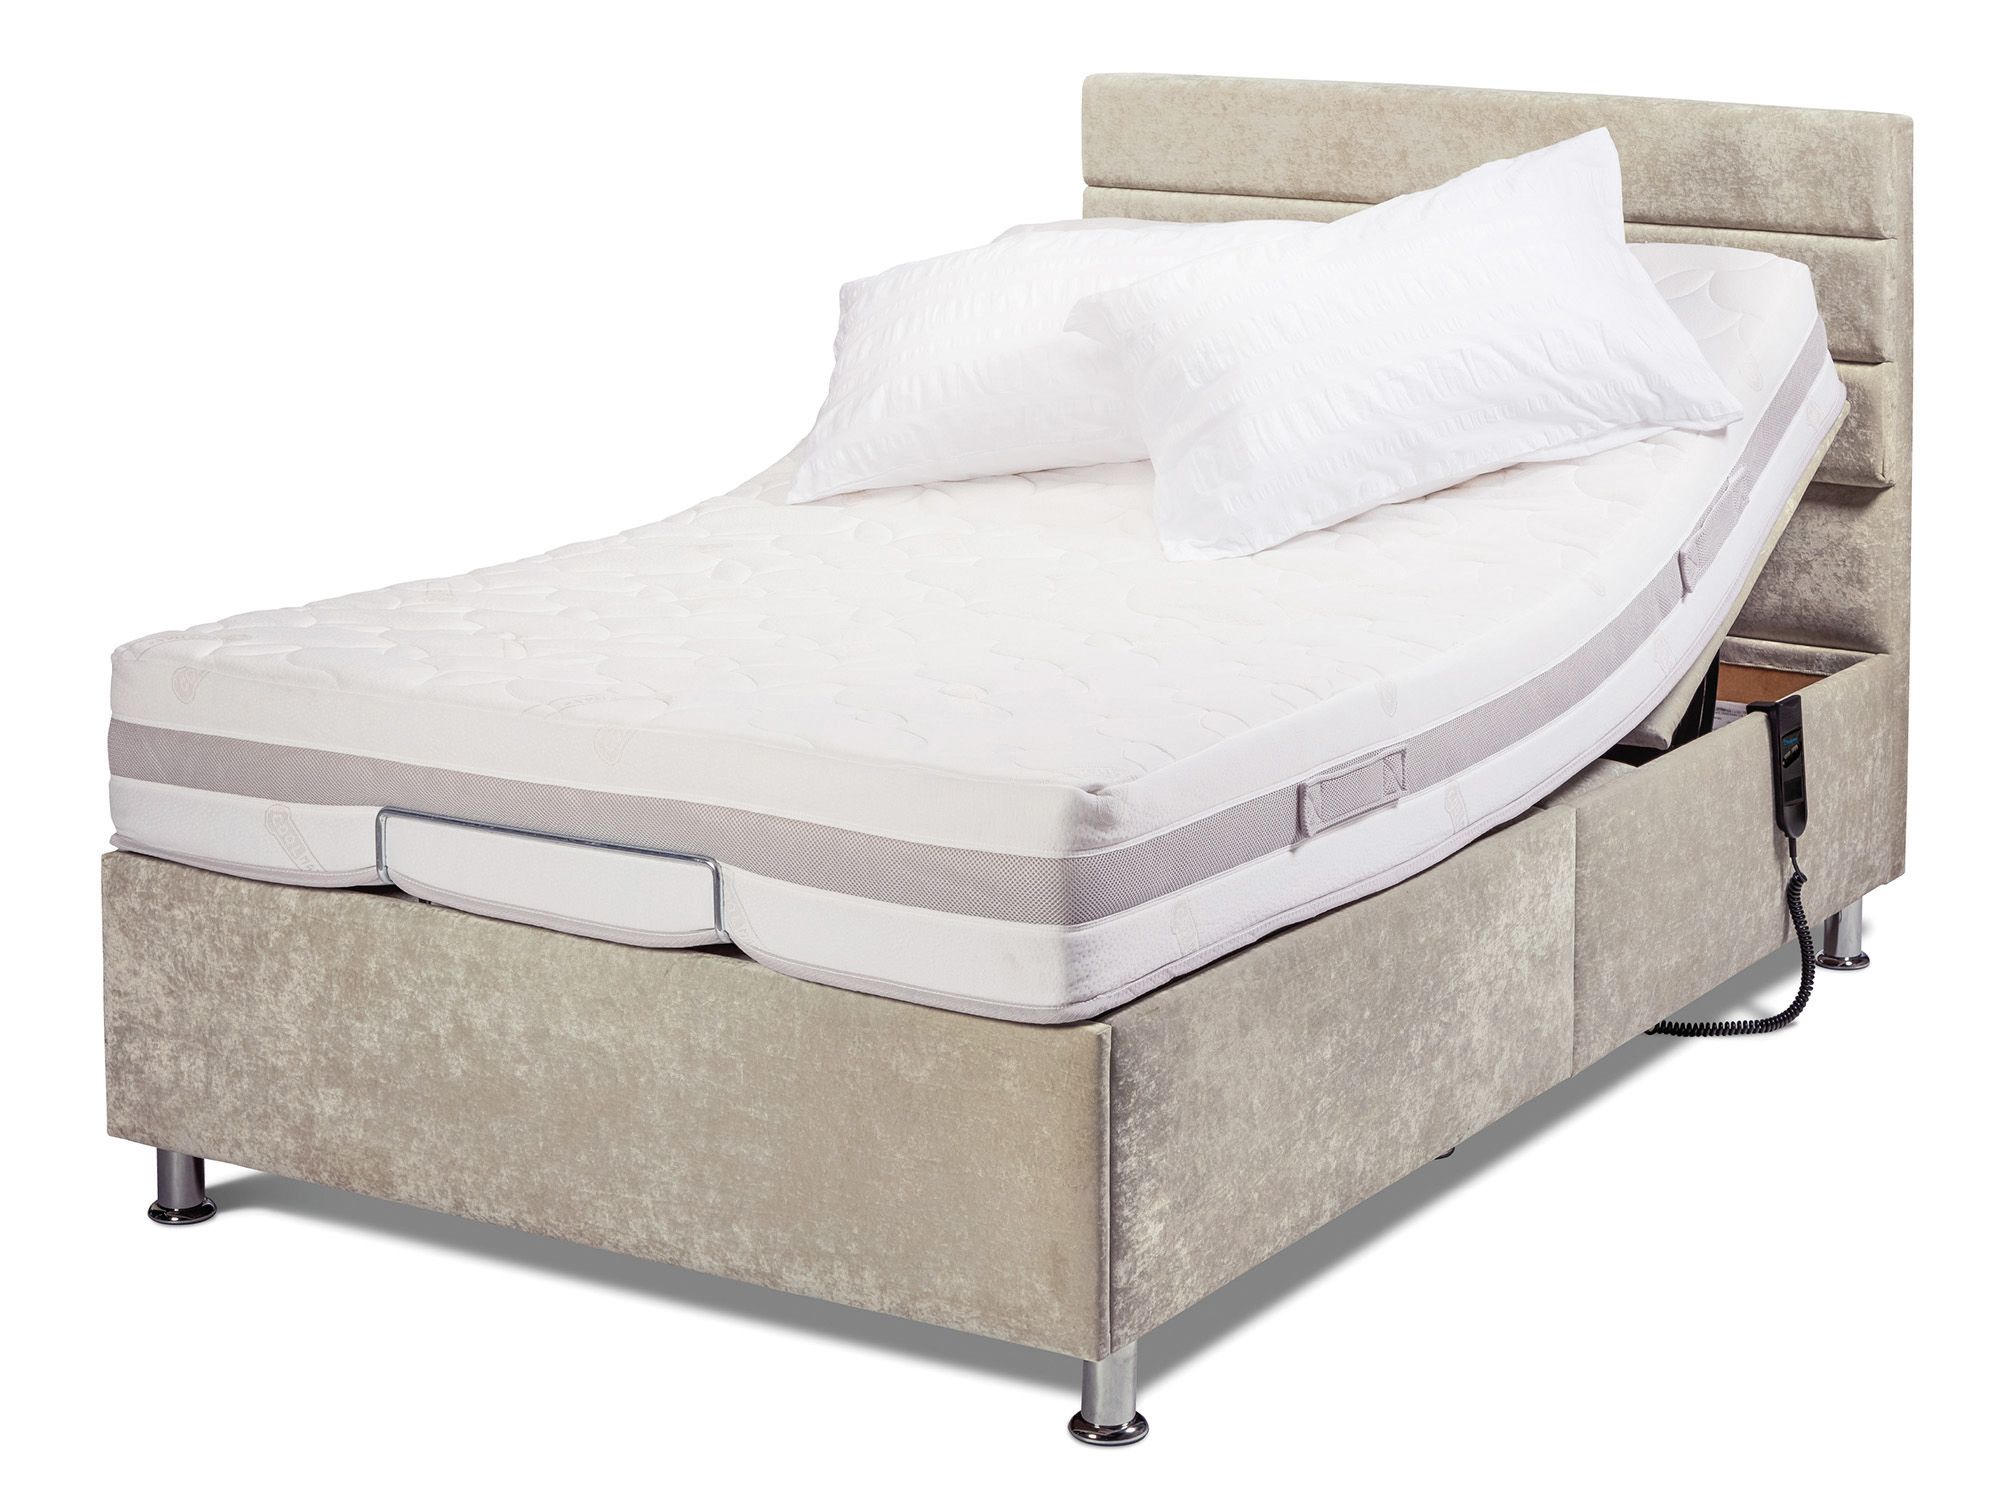 small child bed mattress